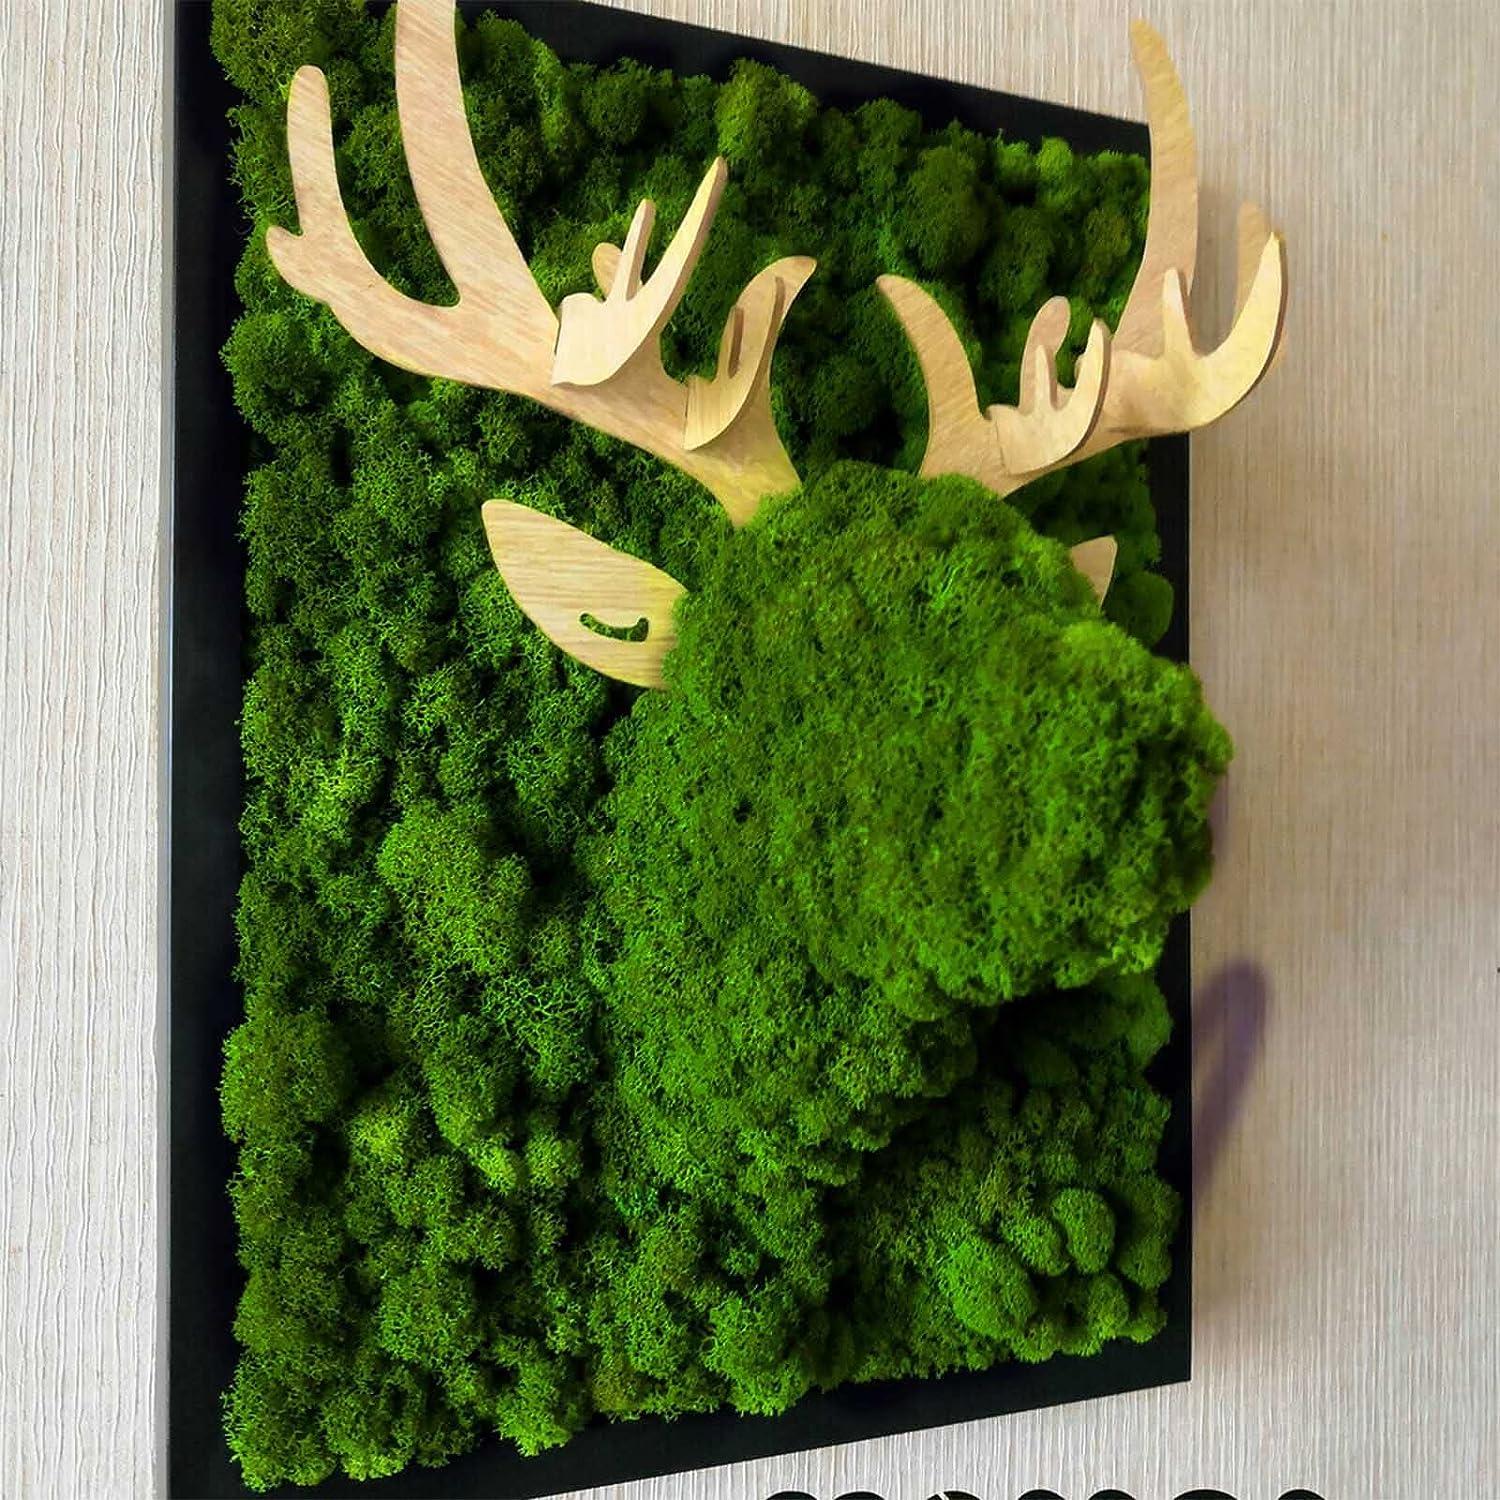 Preserved Reindeer Moss-floral Moss-4 Oz Bag in Many Colors-deer